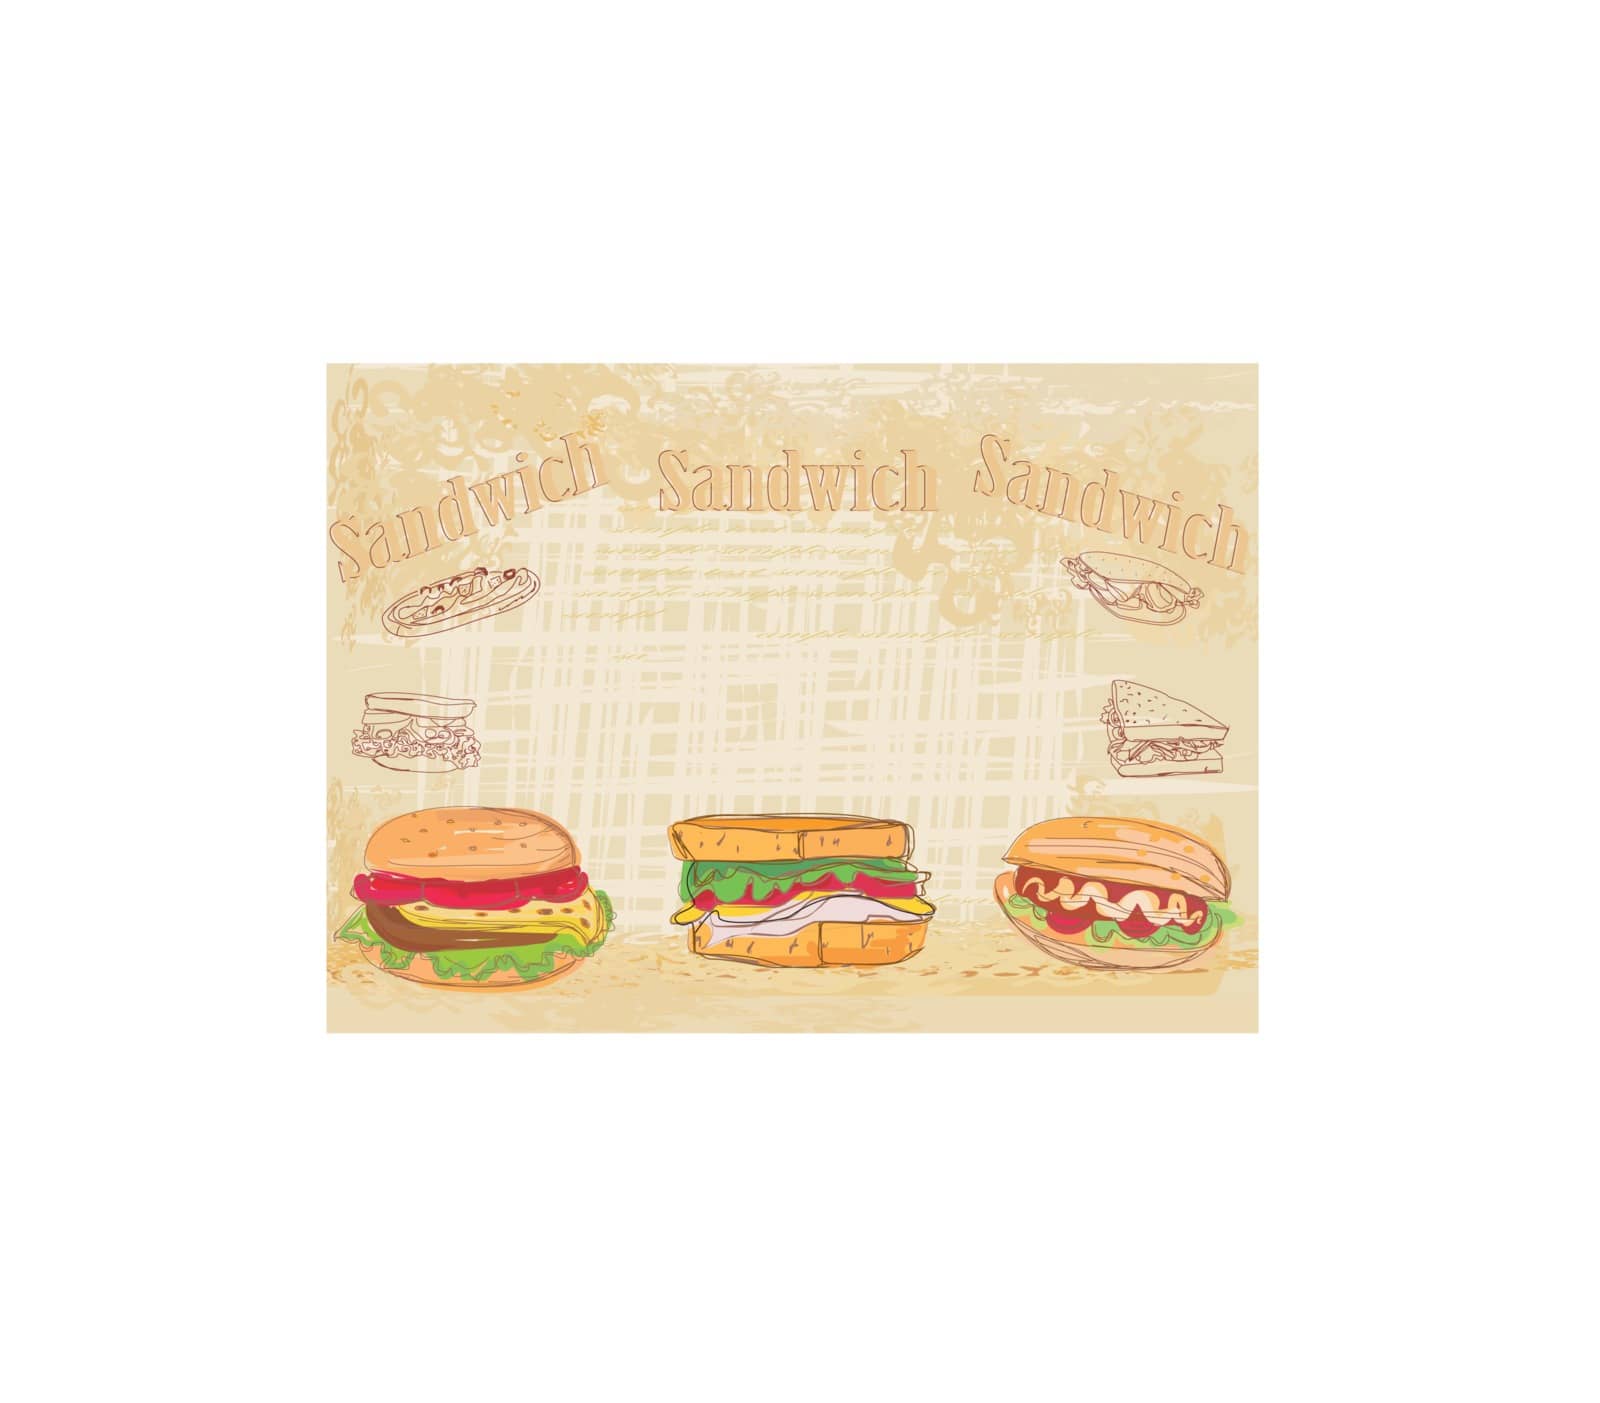 Horizontal grunge background with sandwich